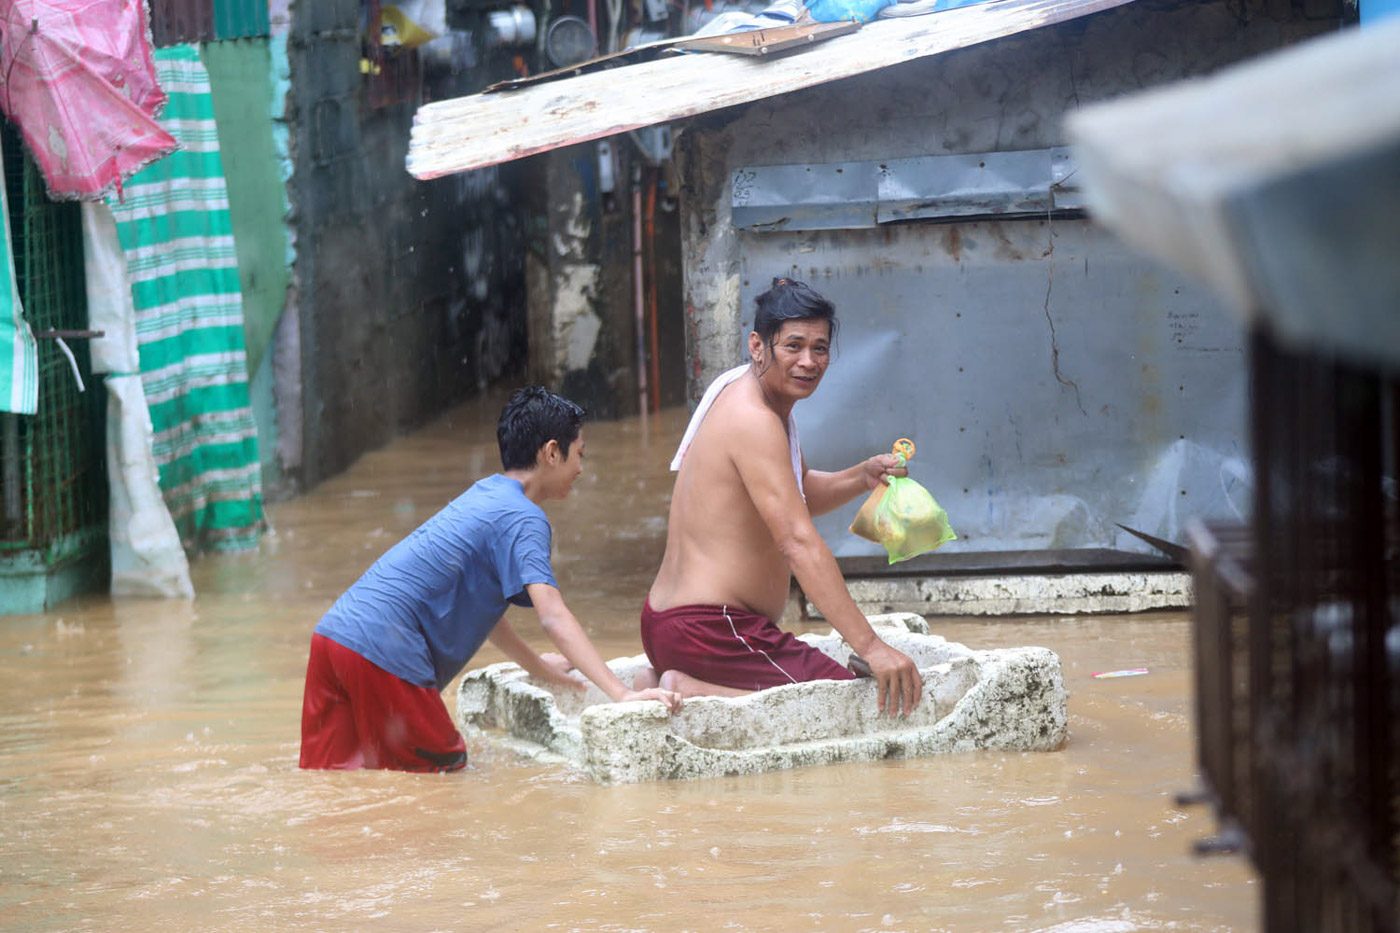 LOOK: Floods hit parts of Luzon